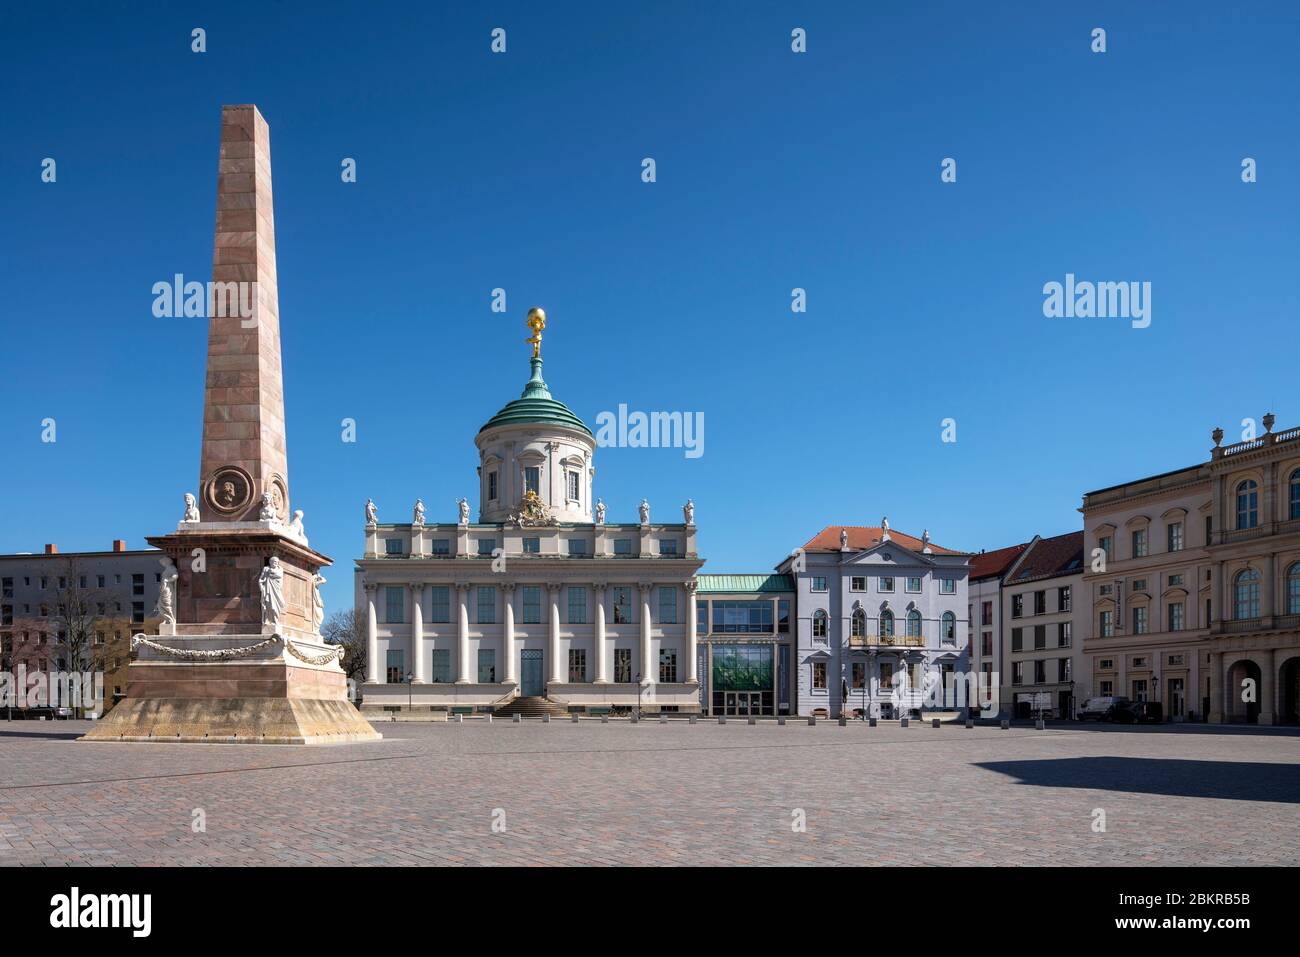 Potsdam, rekonstruierter Alter Markt, Altes Rathaus, Obelisco, Kombelsdorffhaus und Museum Barberini Foto Stock